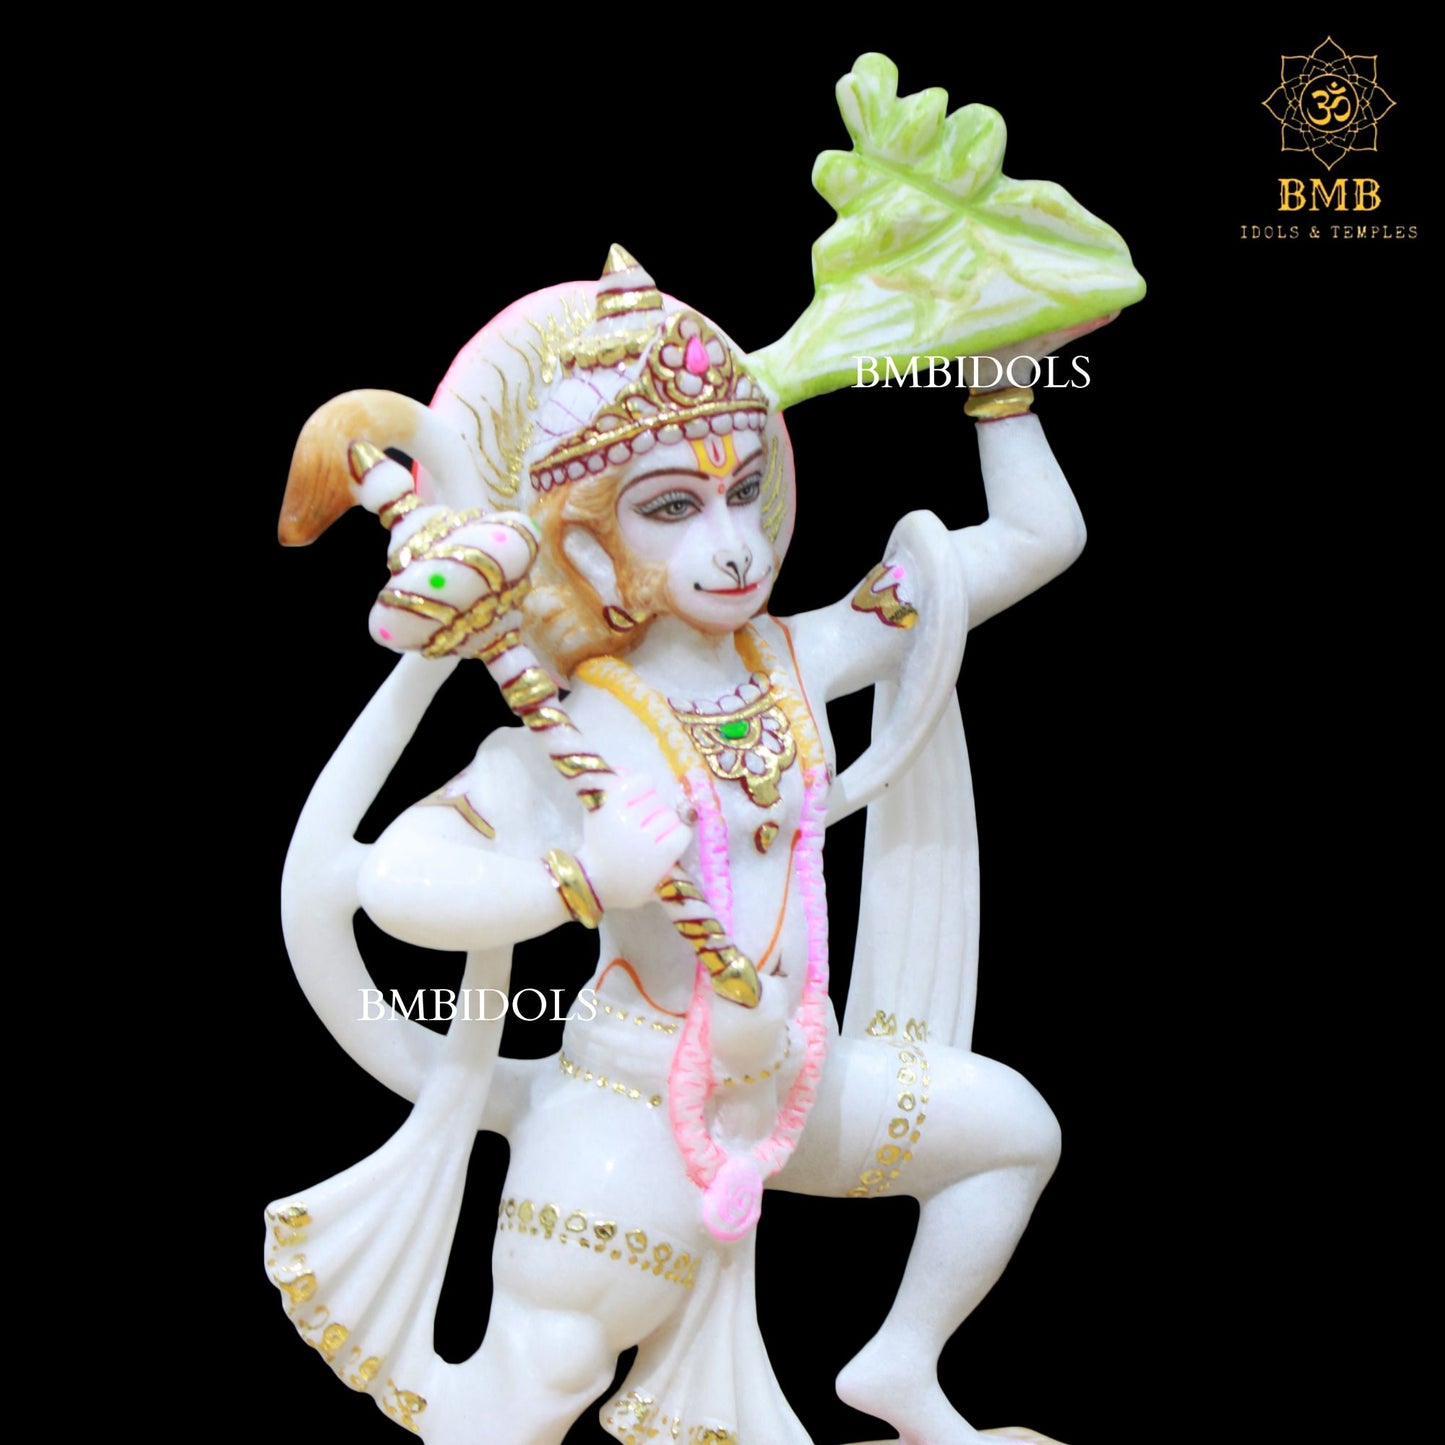 Marble Veer Hanuman Statue carrying Gada in Hand in 12inch